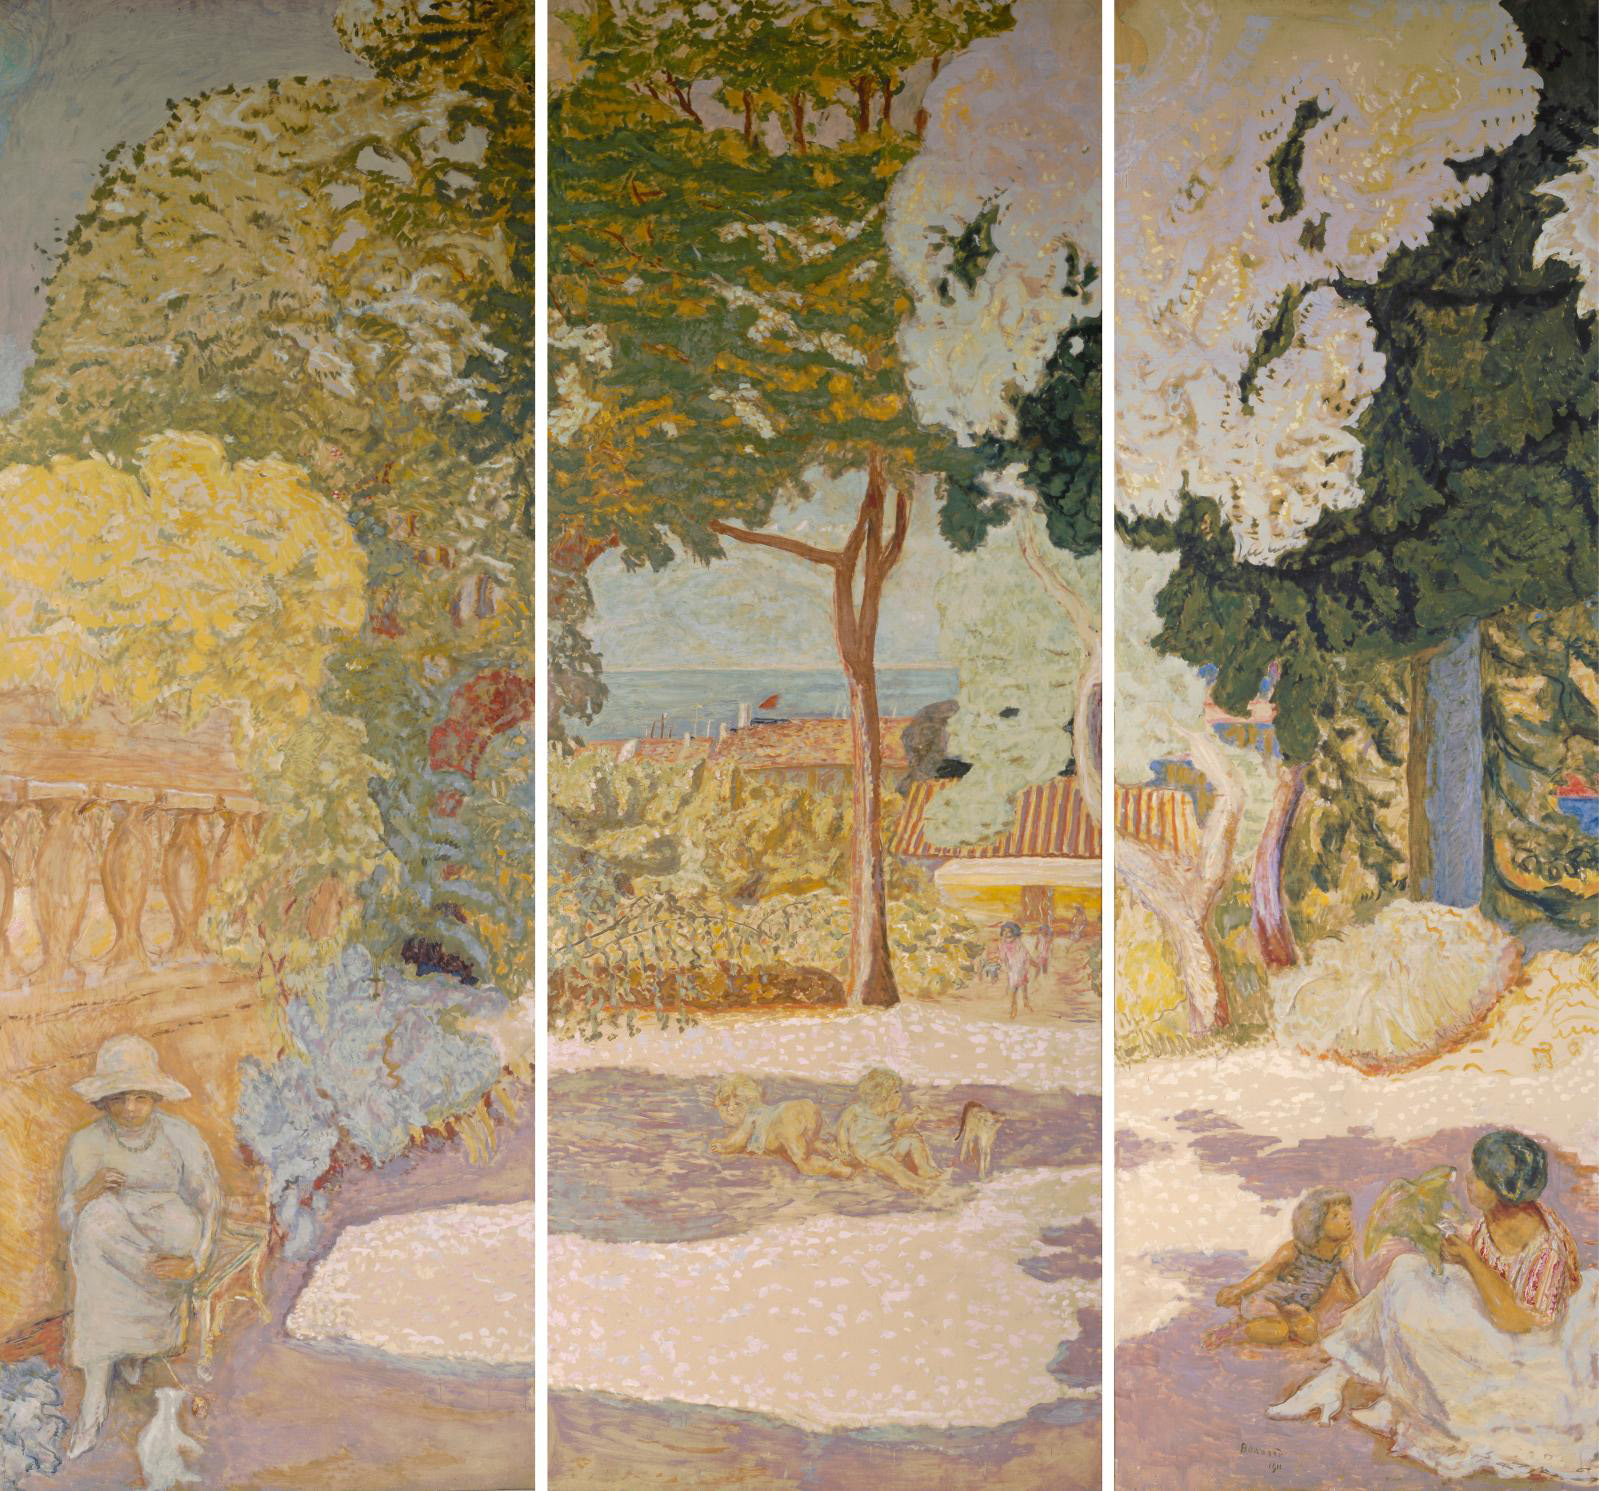 Pierre Bonnard (1867–1947), La Méditerranée (The Mediterranean, 1911), oil on canvas, each panel 407 x 152 cm/160.24 x 59.84 in.State Herm